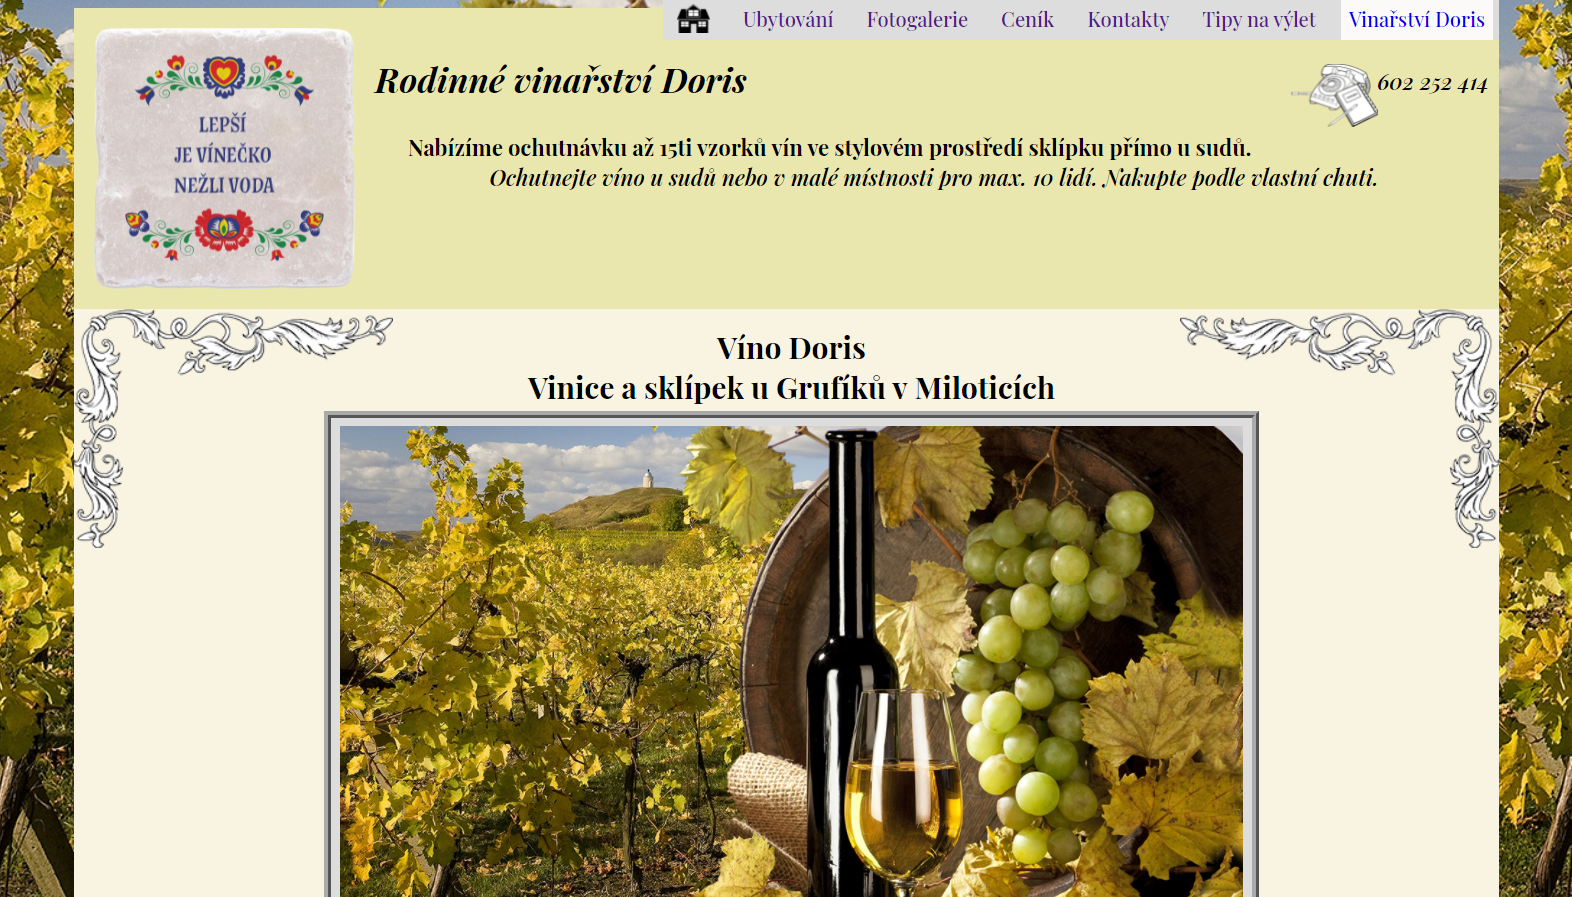 Viniculture south Moravia